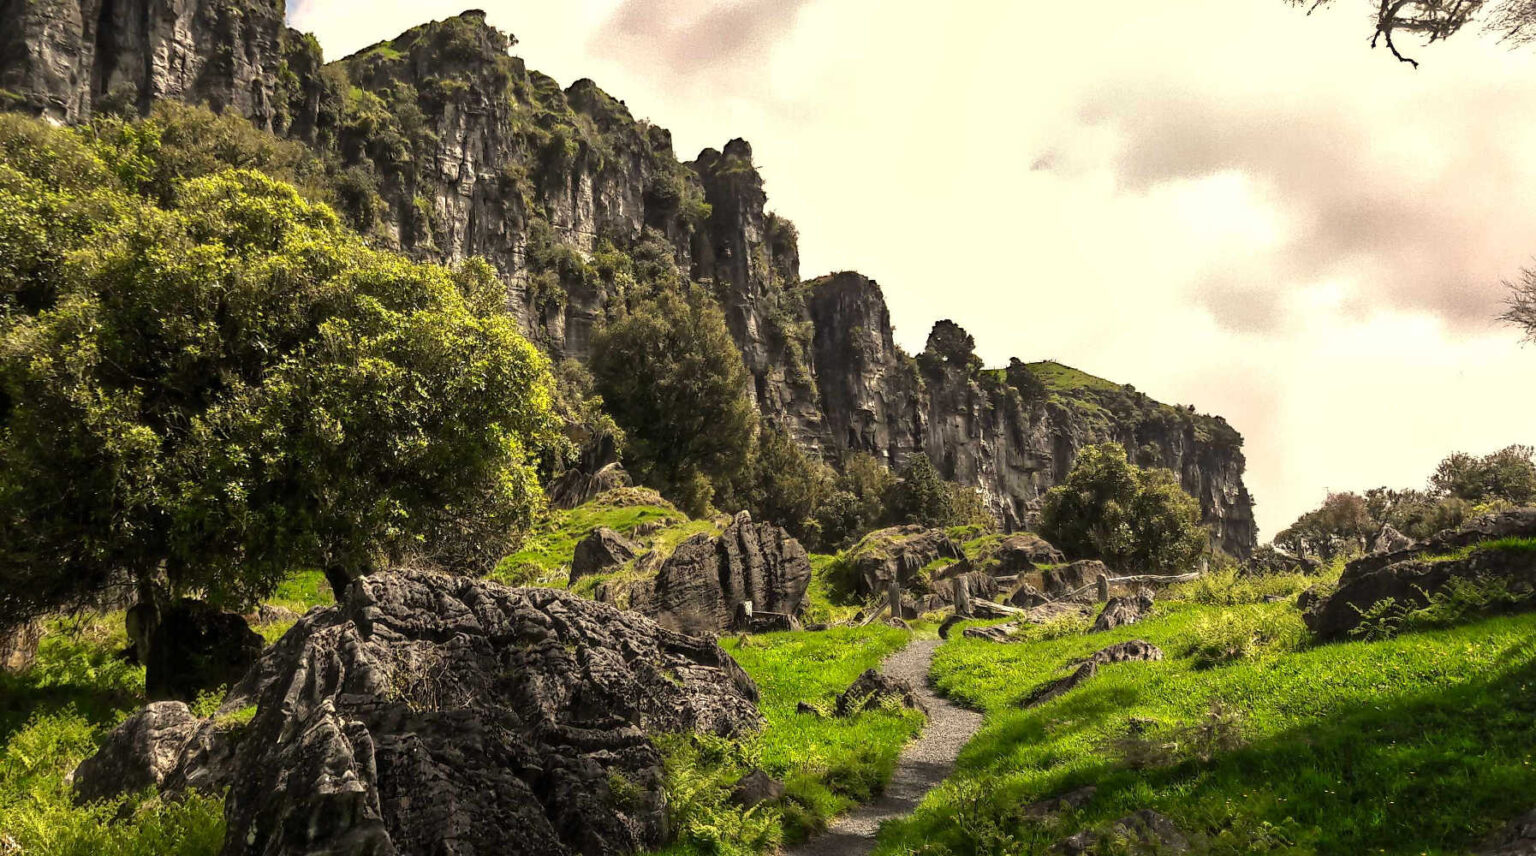 Trollshaw cliffs, Piopio now called Hairy Feet Waitomo was used in The Hobbit movies, New Zealand